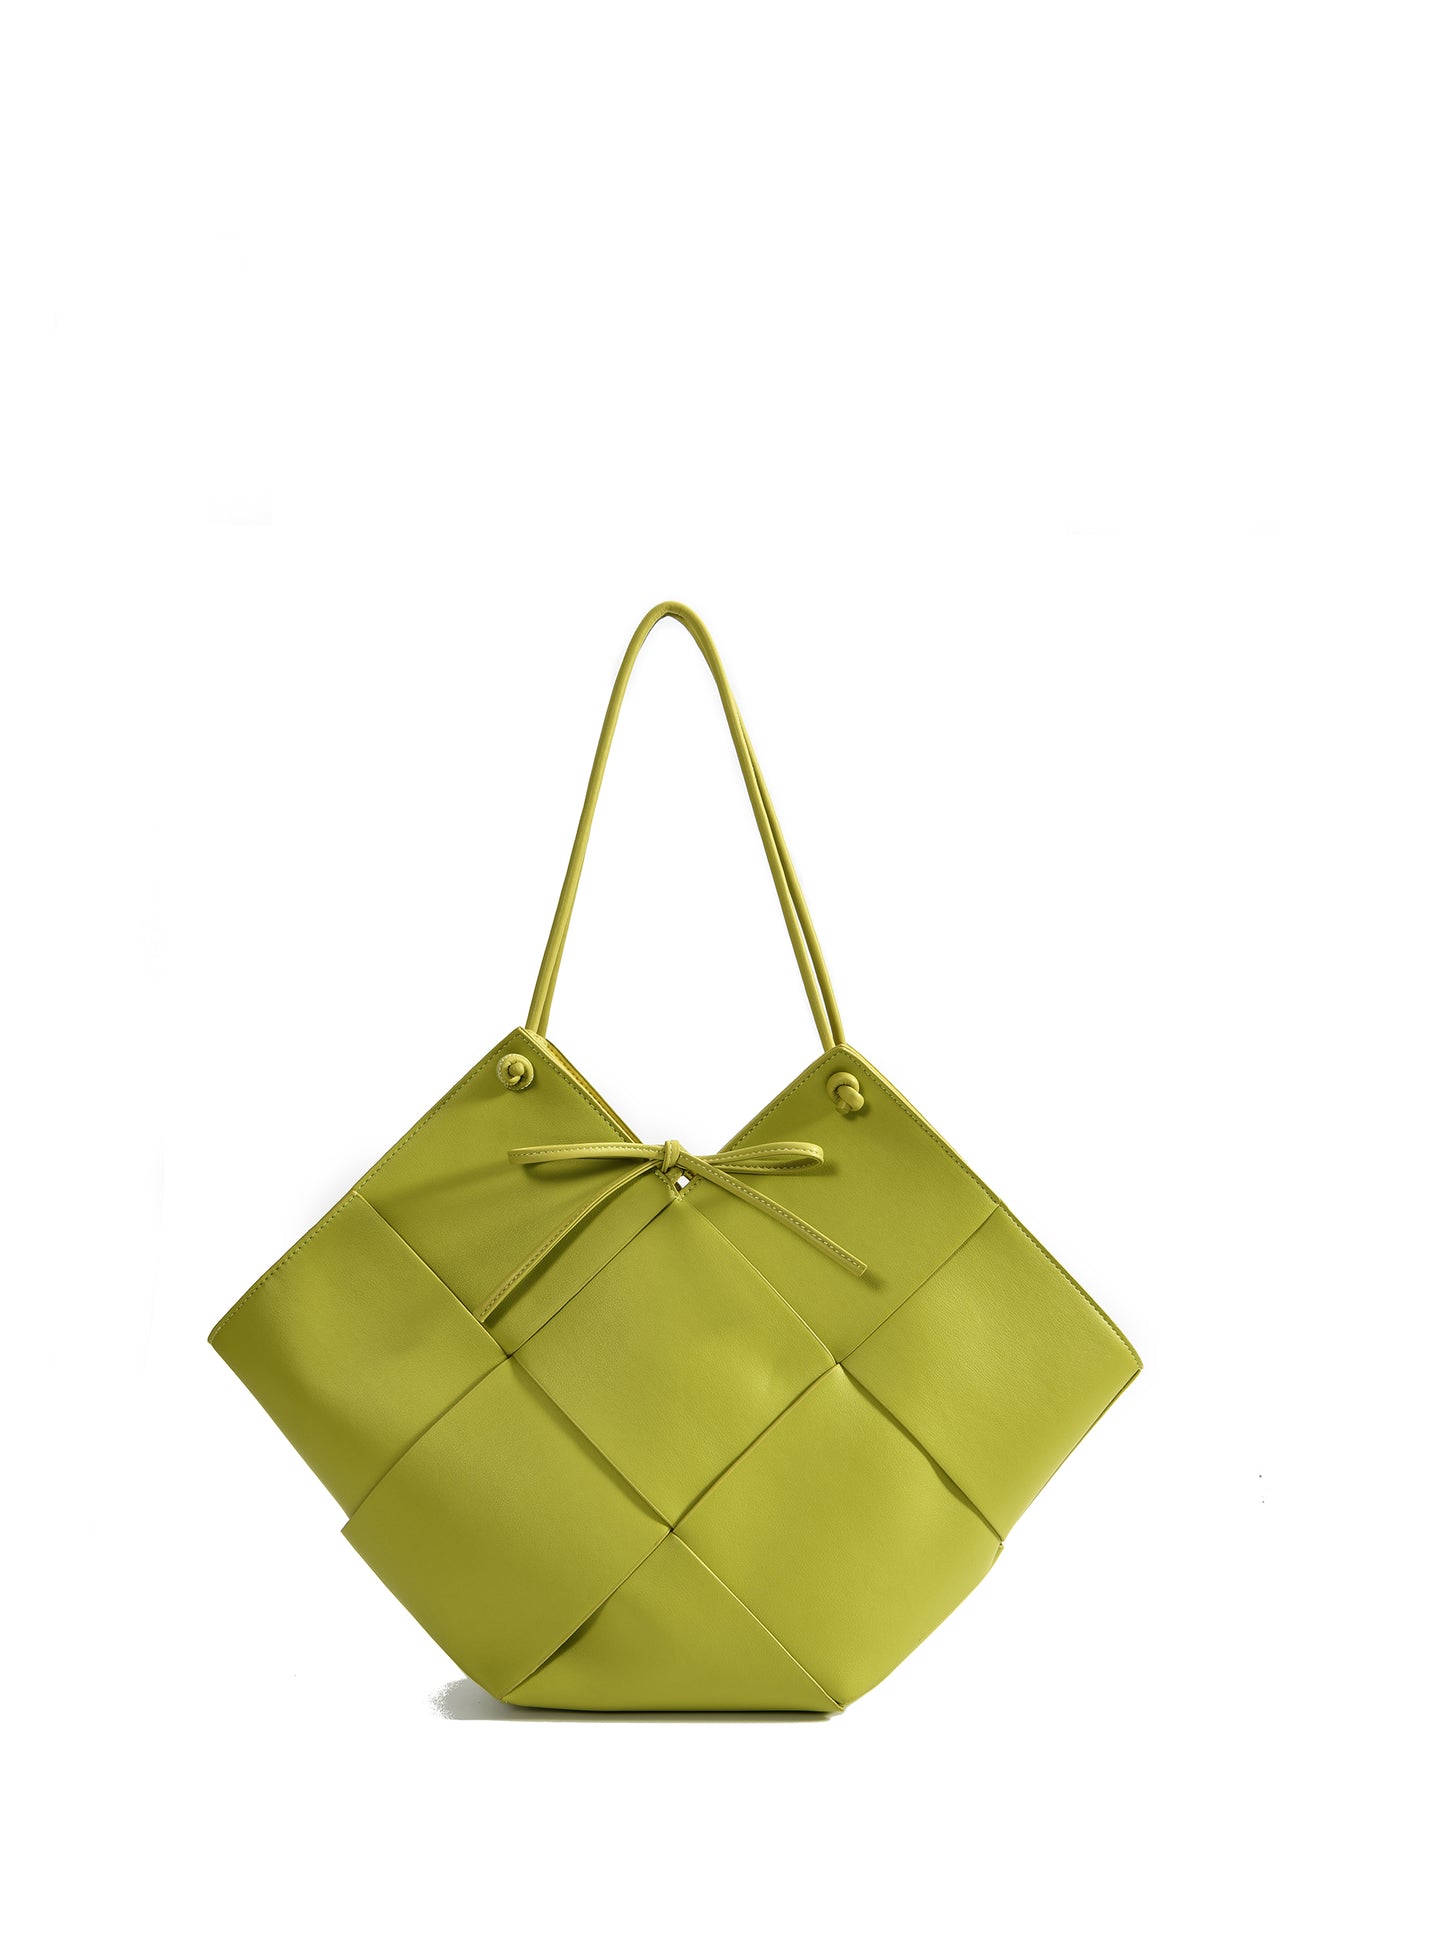 Taylor Contexture Leather Bag, Kiwi Green